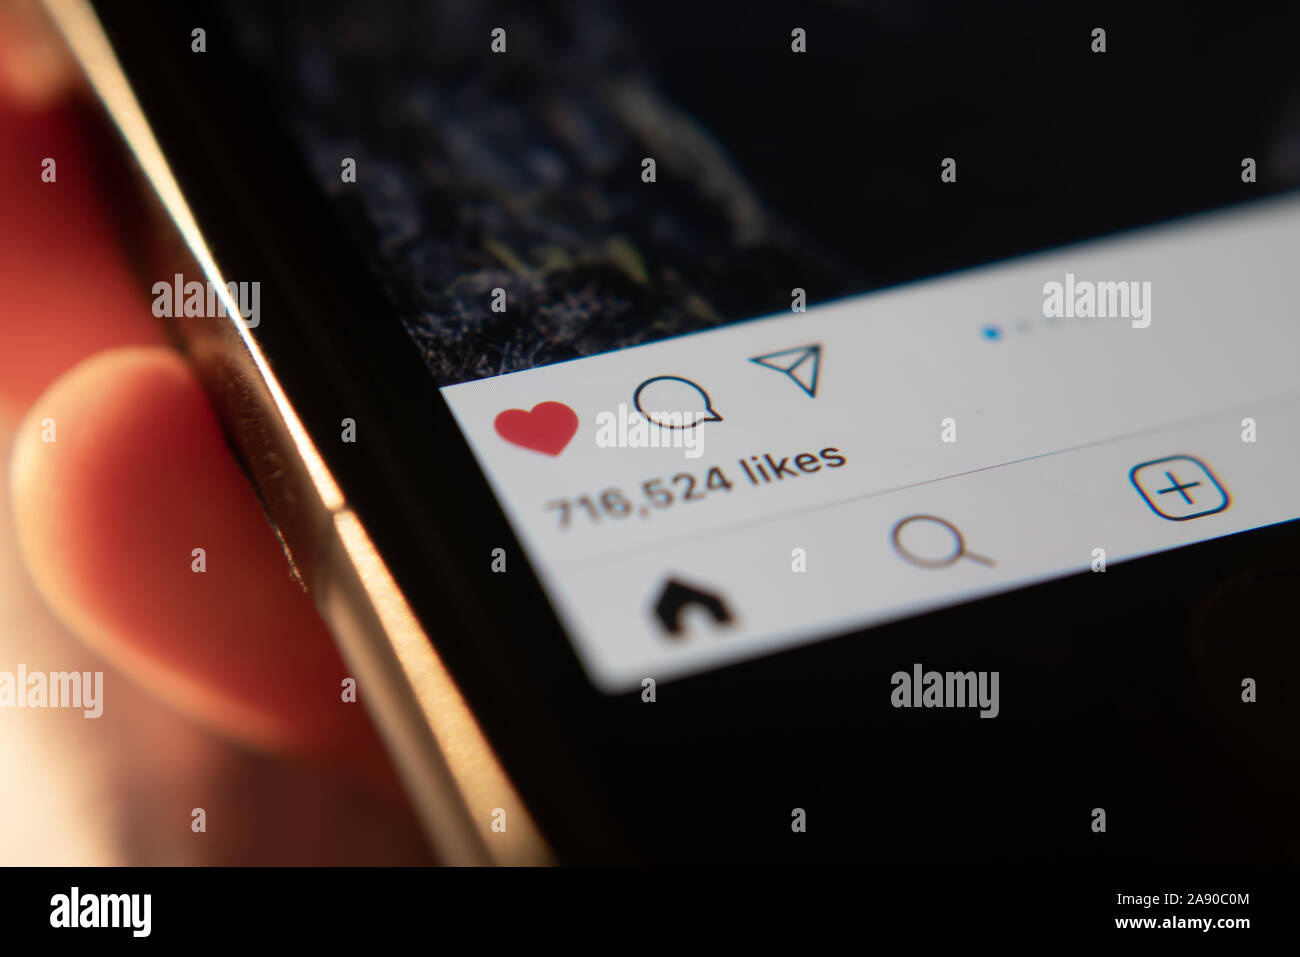 Bangkok, Thaïlande - 11 novembre 2019 : l'application Instagram indique le nombre d'aime. Banque D'Images